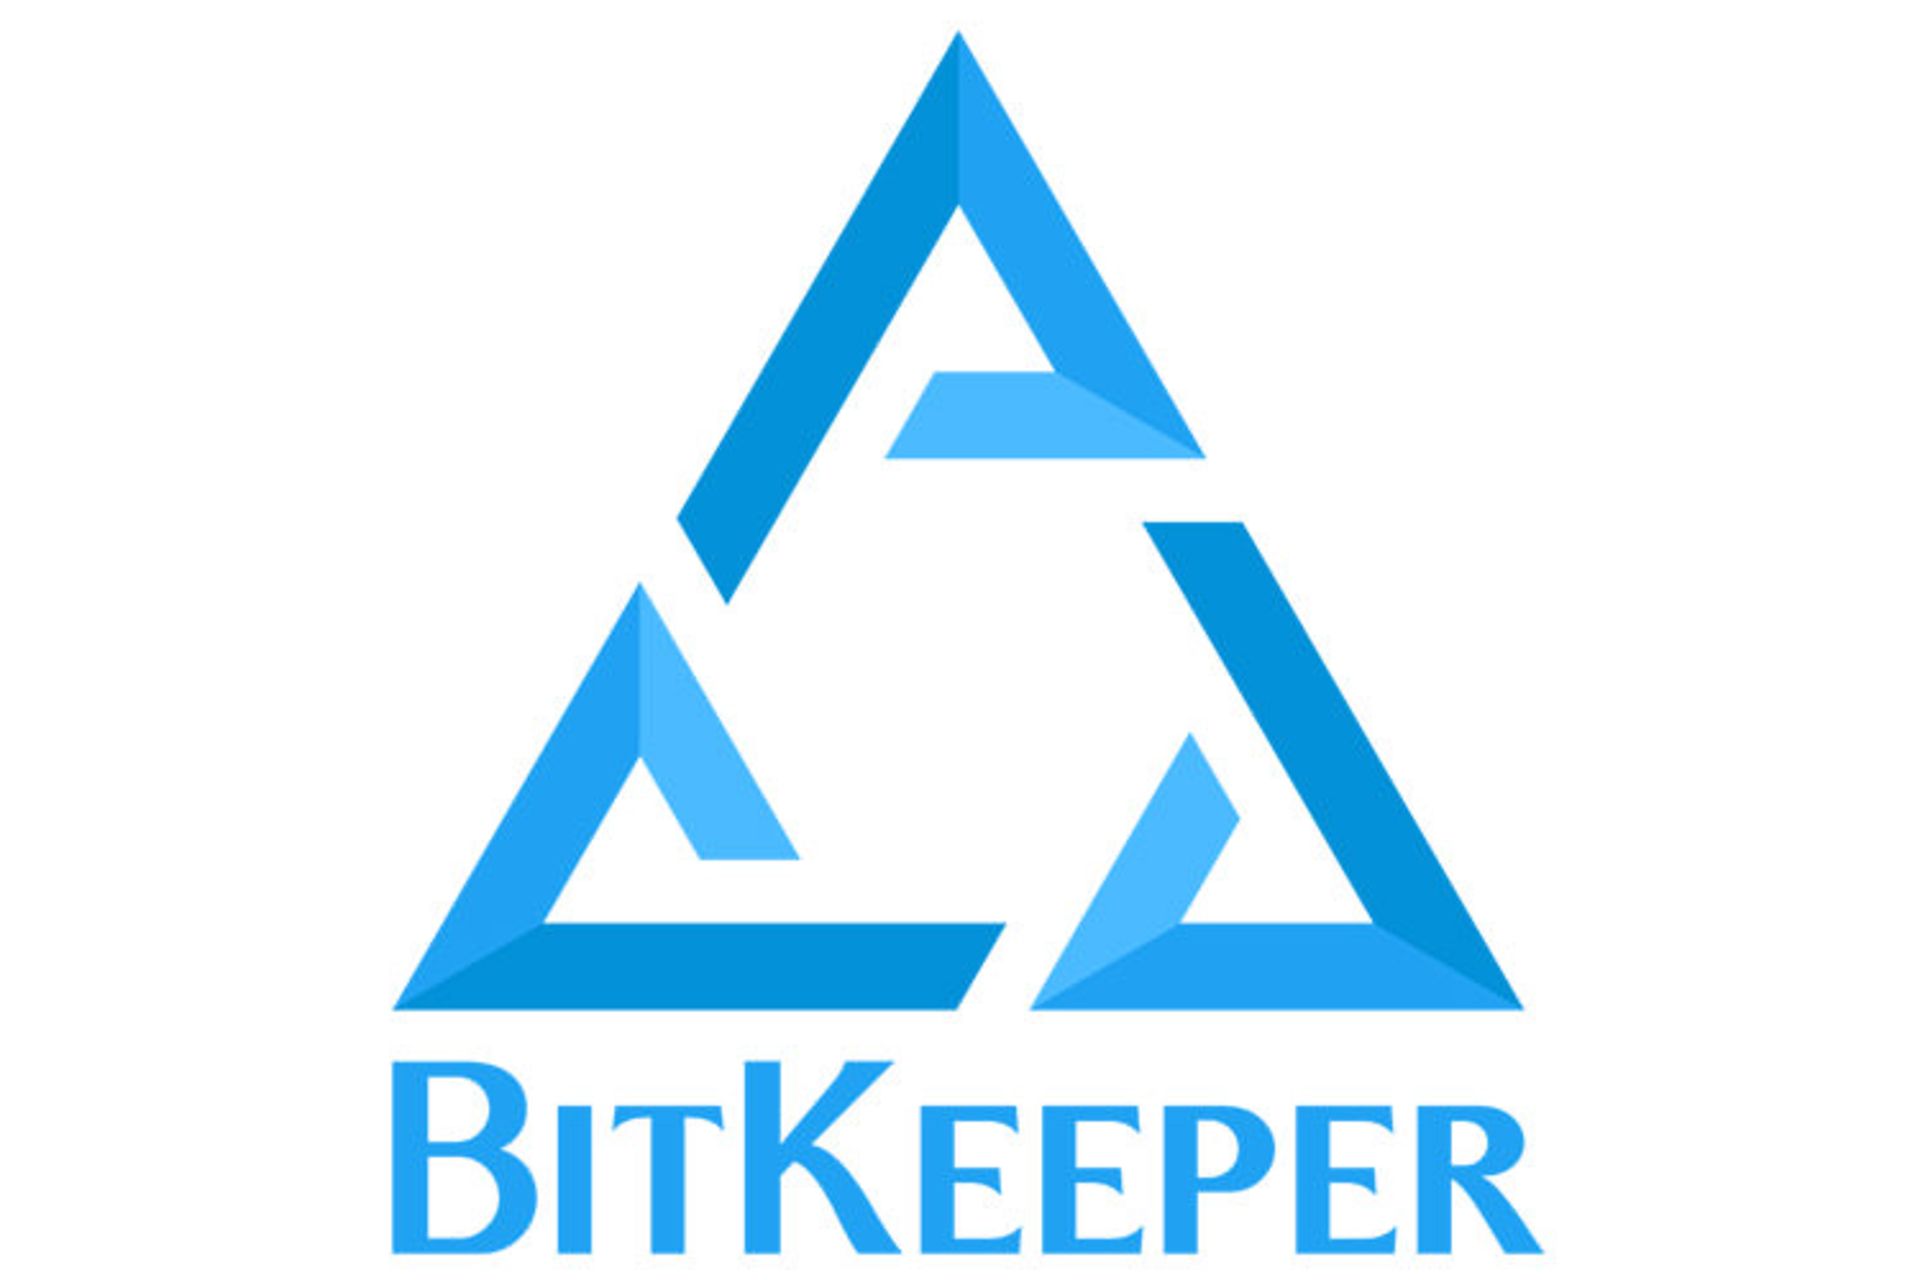 مرجع متخصصين ايران بيت كيپر / BitKeeper